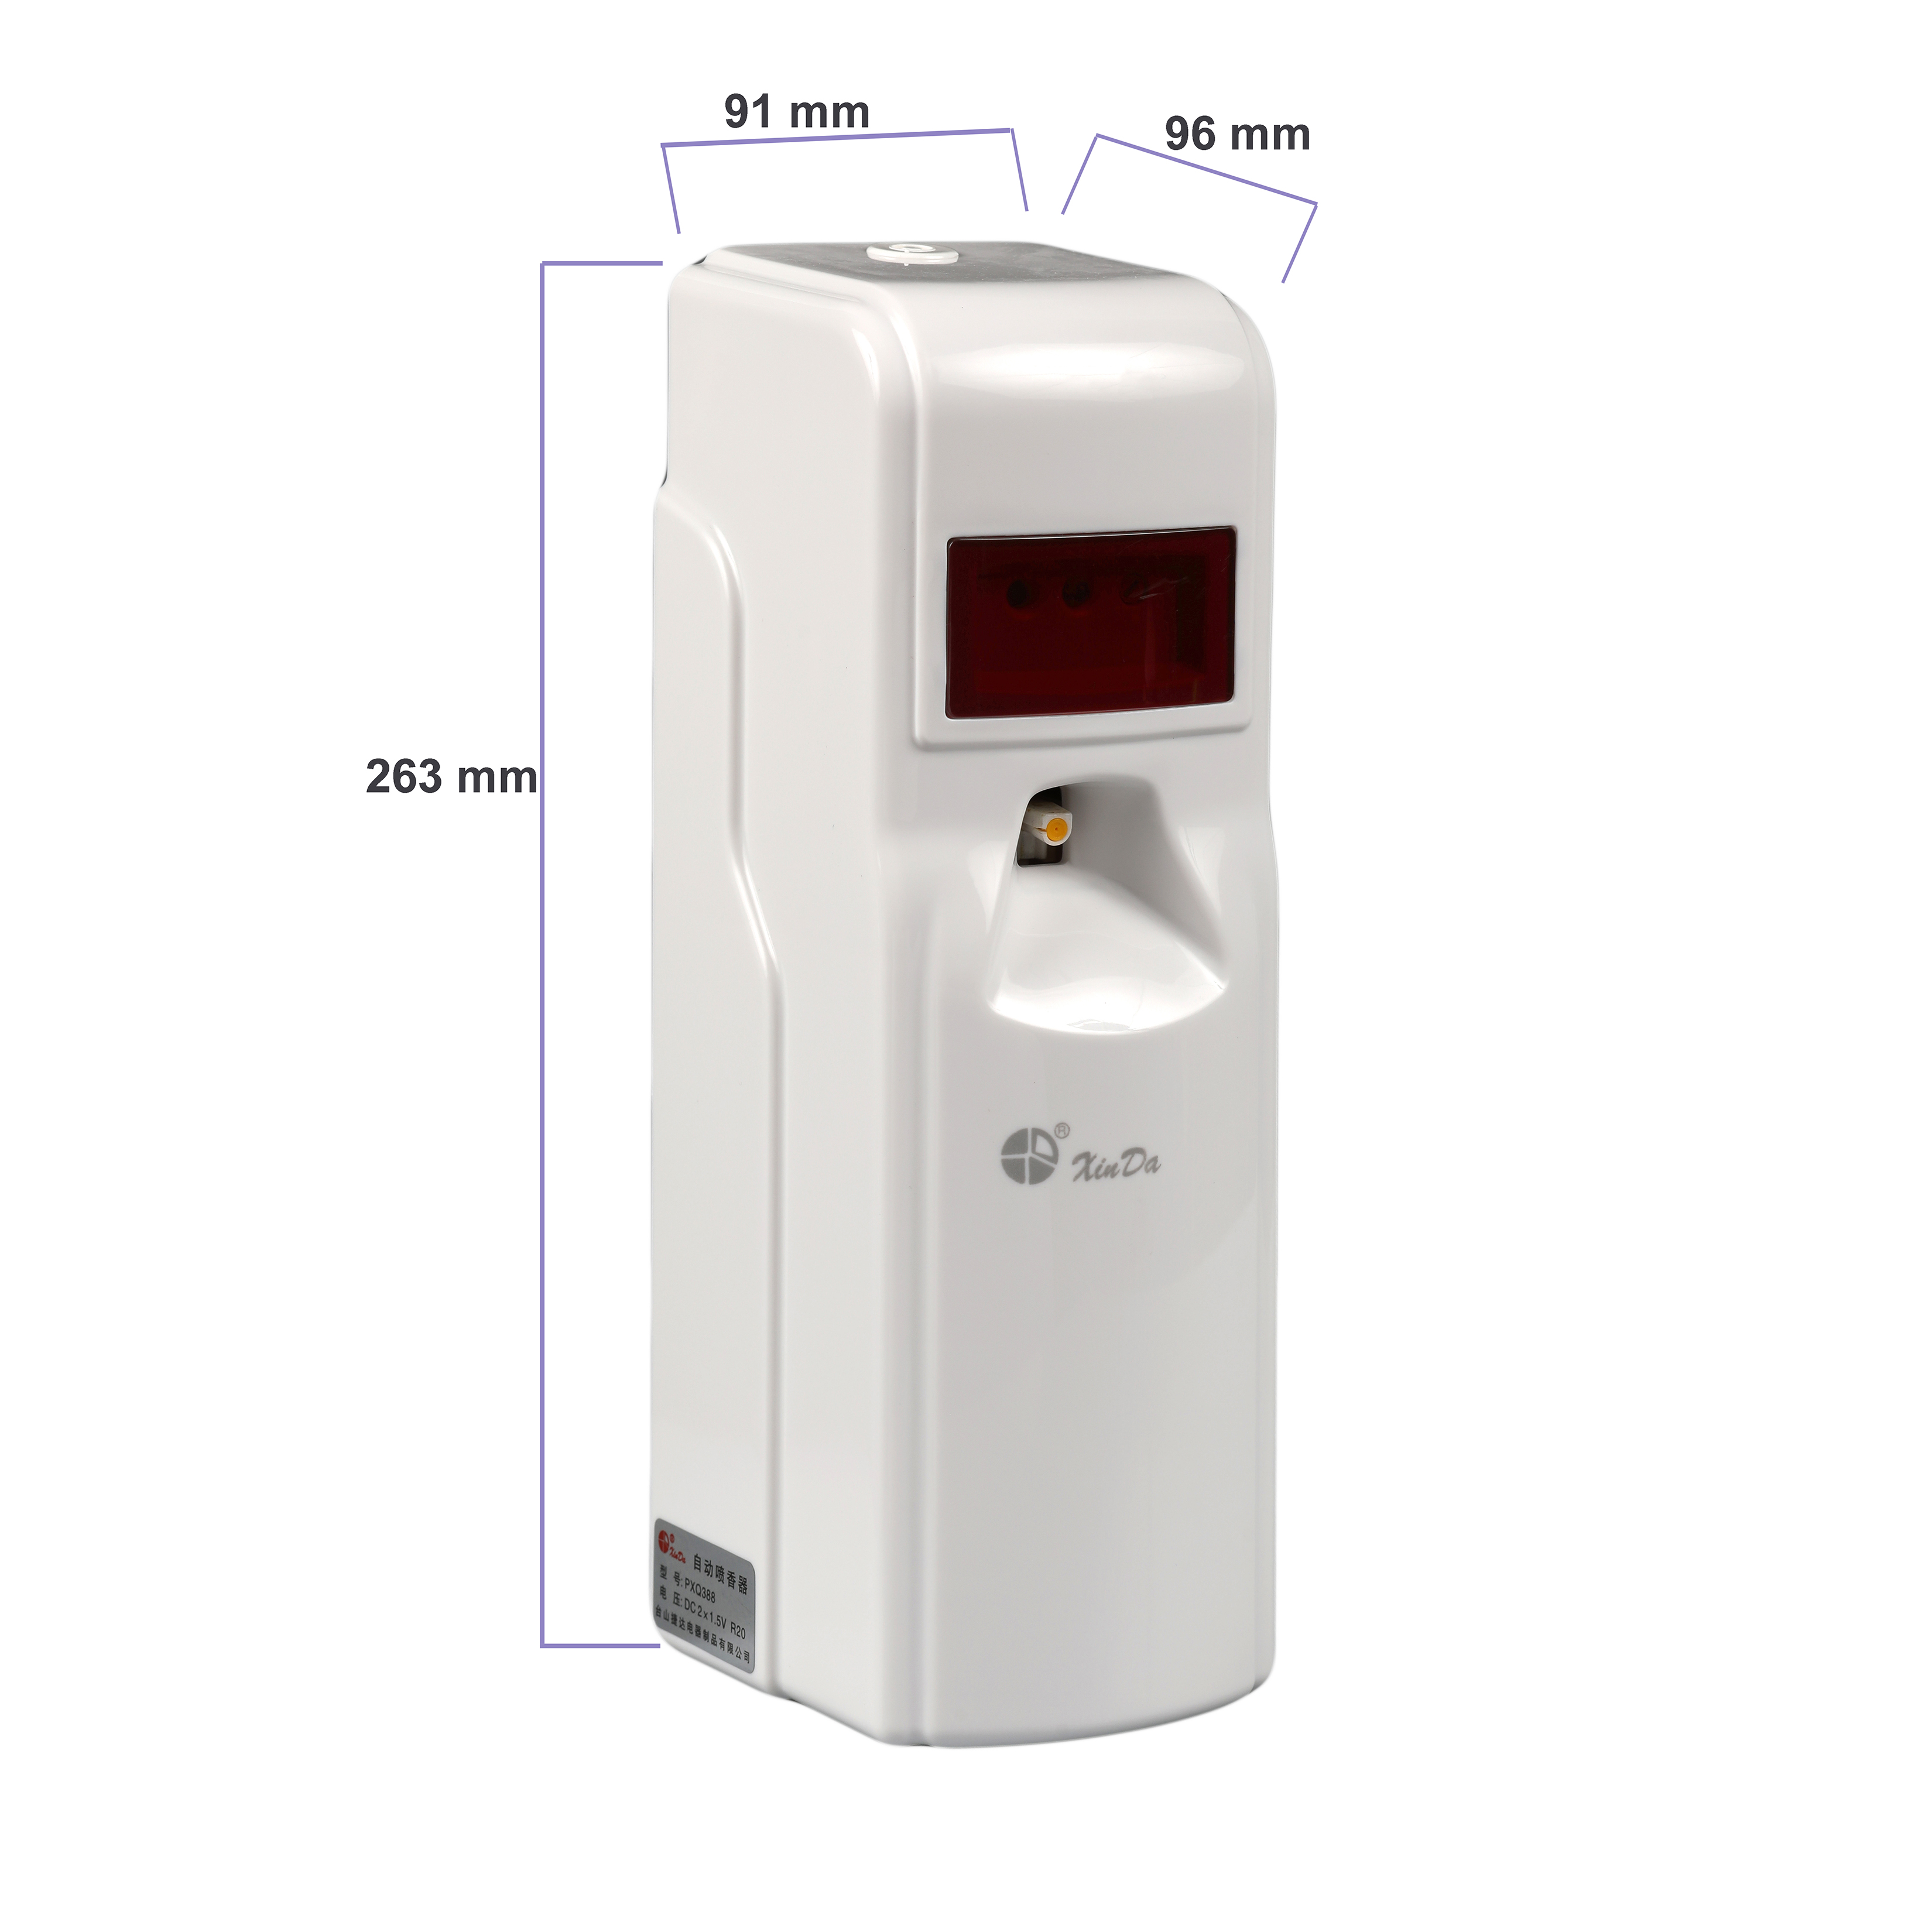 Dispensador automático de perfume en aerosol XINDA PXQ388B